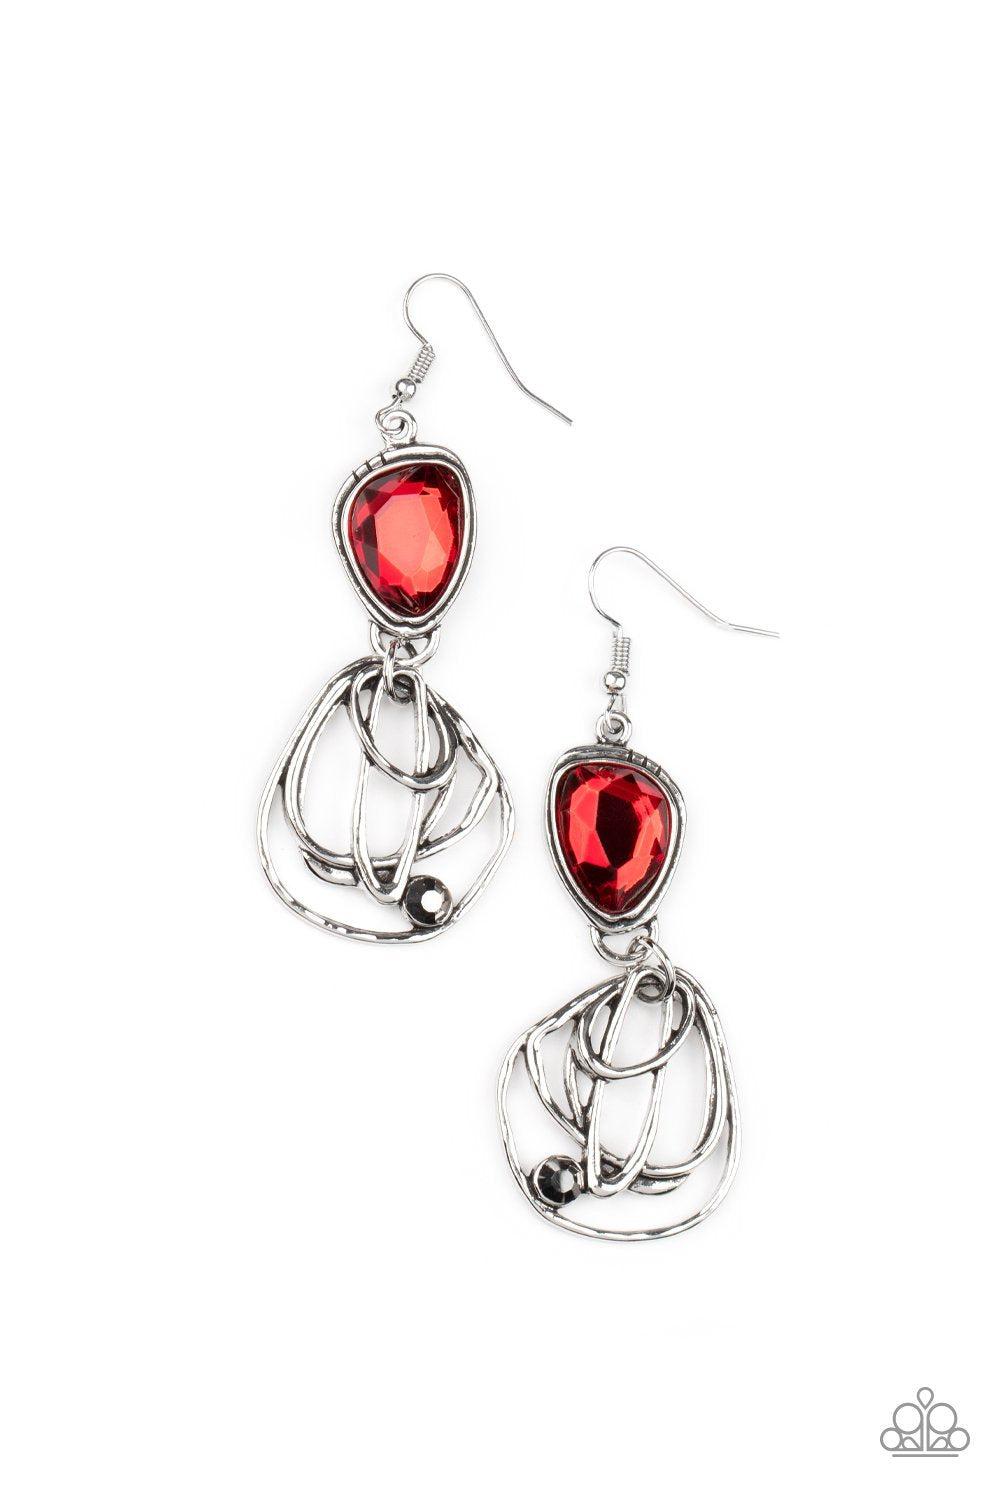 Galactic Drama Red Rhinestone Earrings - Paparazzi Accessories - lightbox -CarasShop.com - $5 Jewelry by Cara Jewels